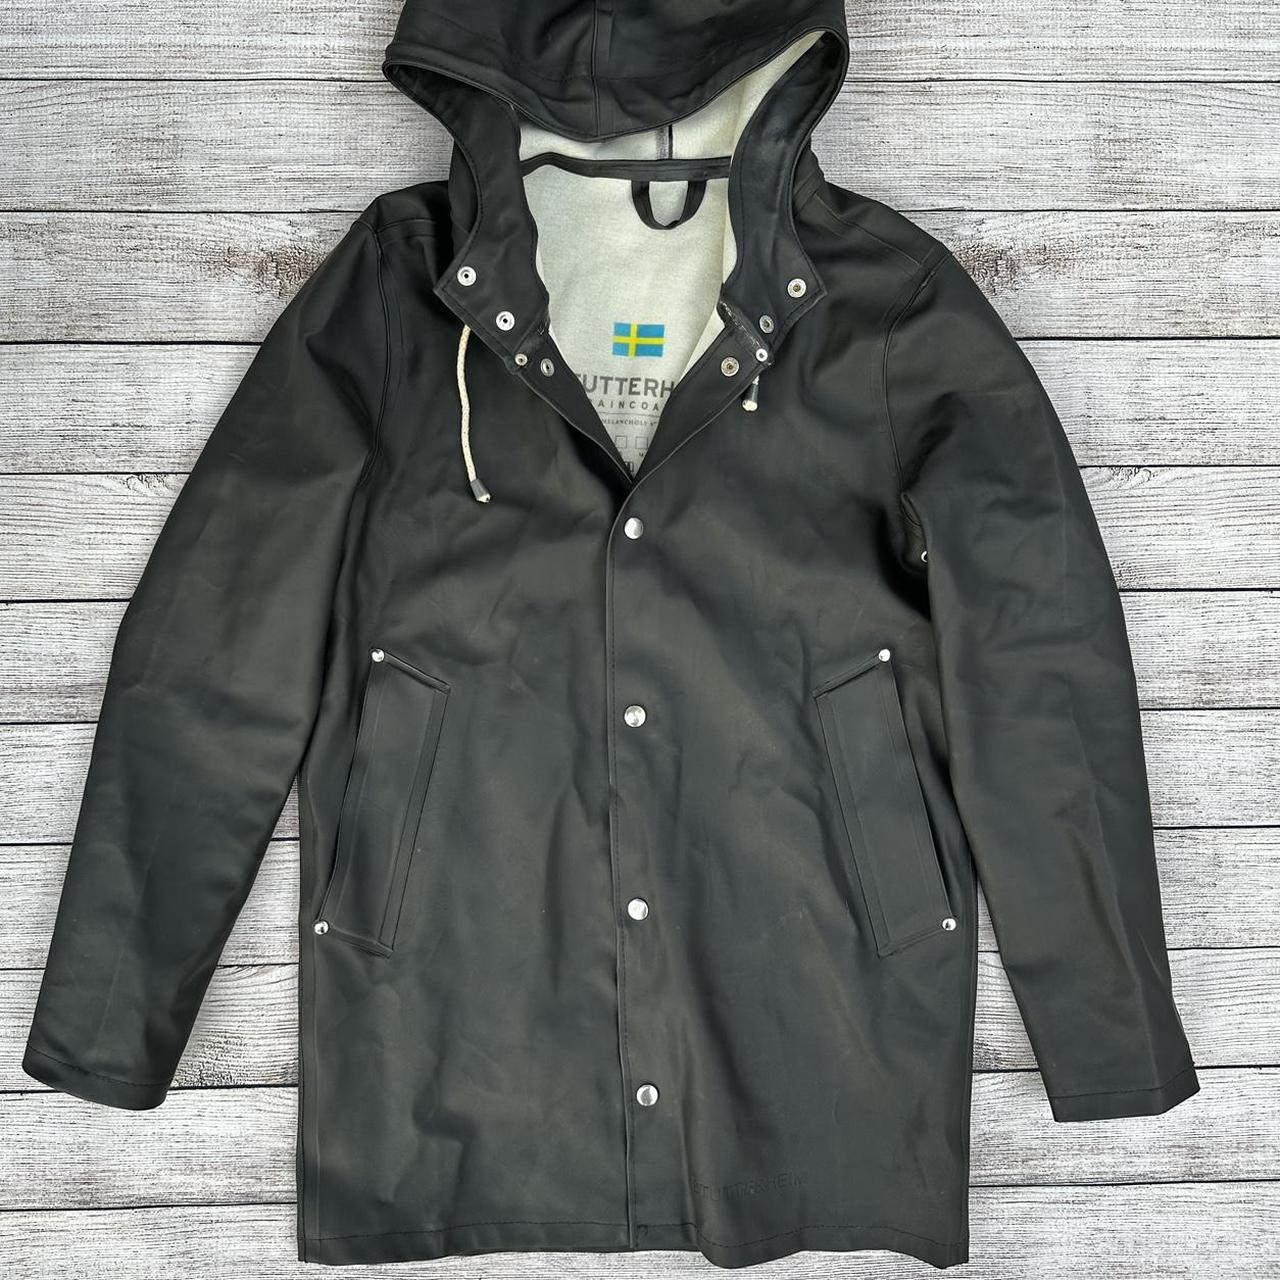 Product Image 1 - Stutterheim rain jacket! Rare item